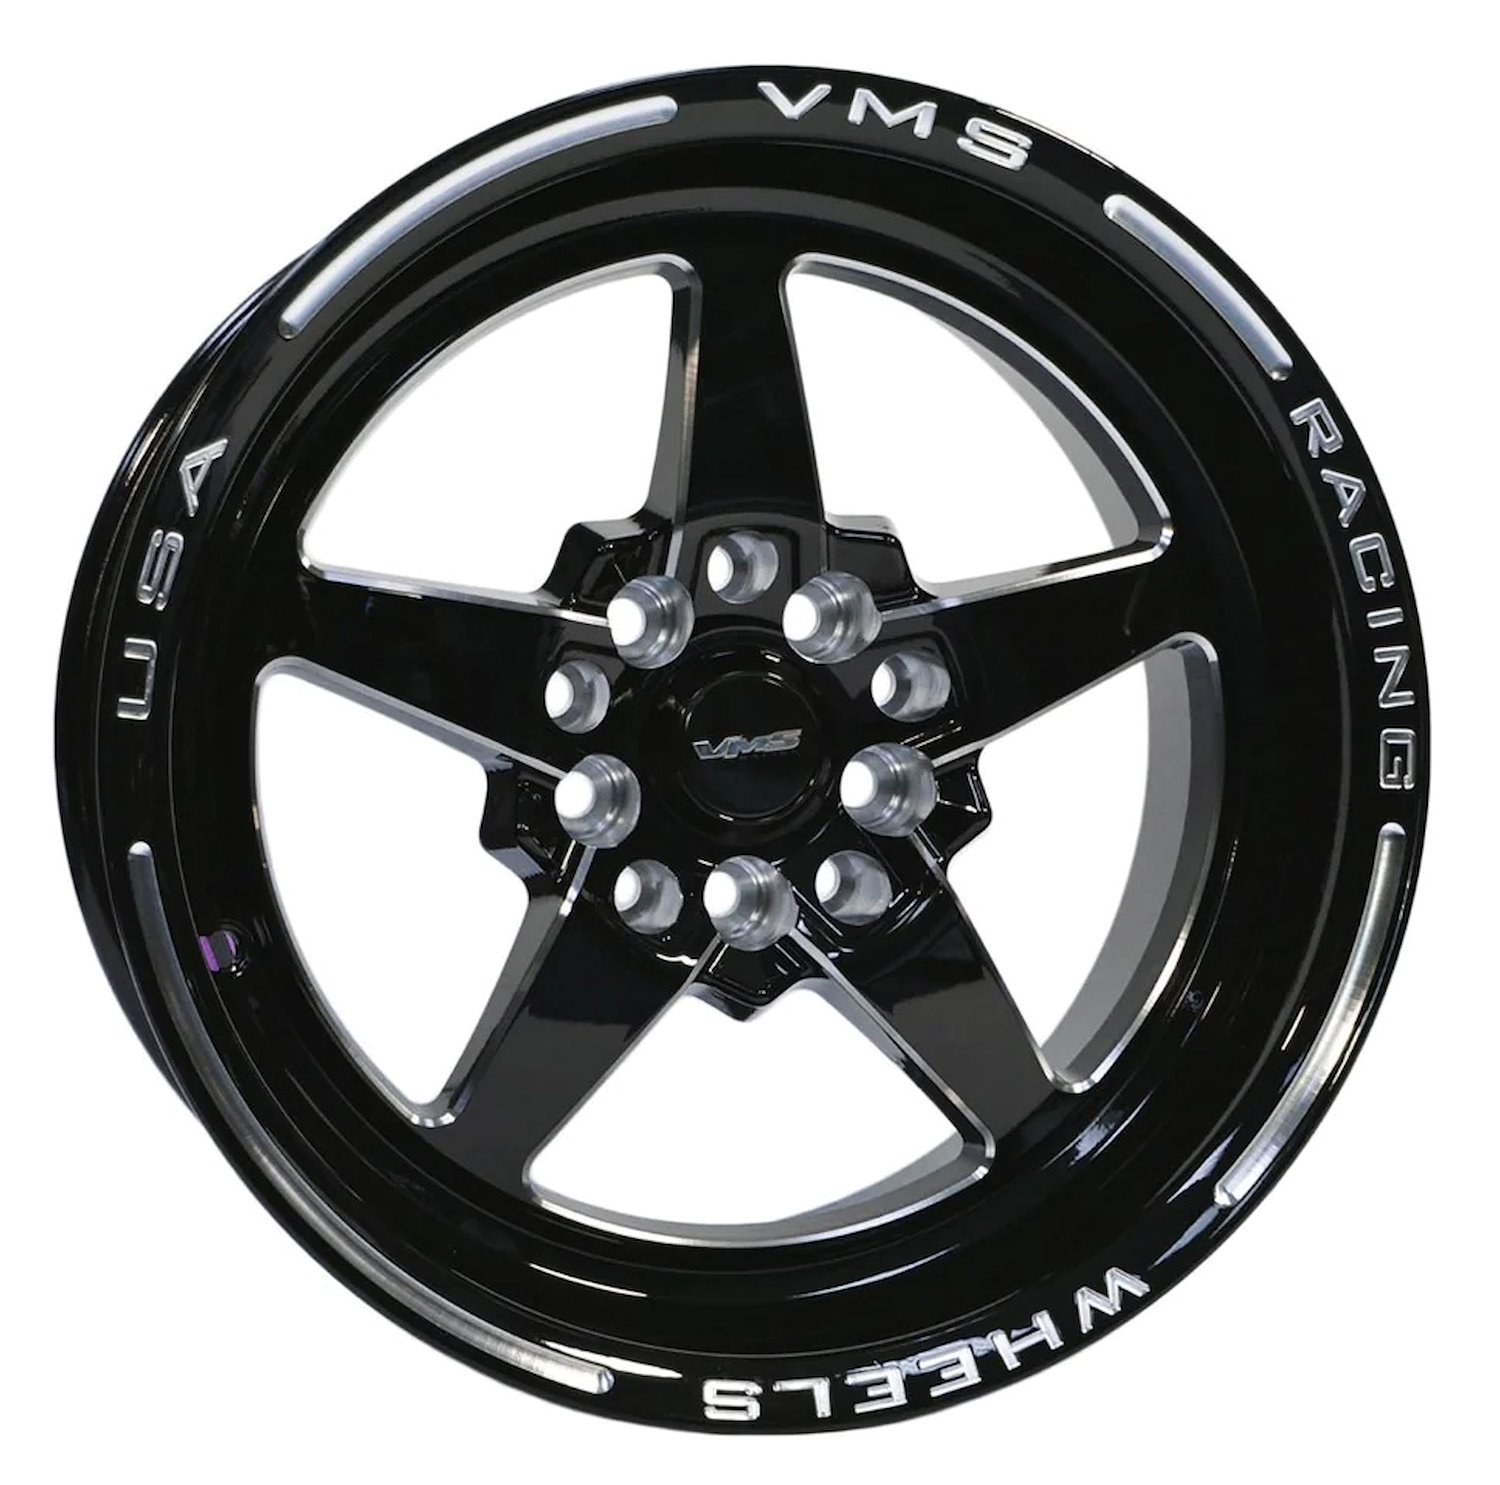 VWST007 V-Star Wheel, Size: 17" x 8", Bolt Pattern: 4 x 100 mm & 4 x 4 1/2" (114.3 mm) [Finish: Gloss Black Milled]